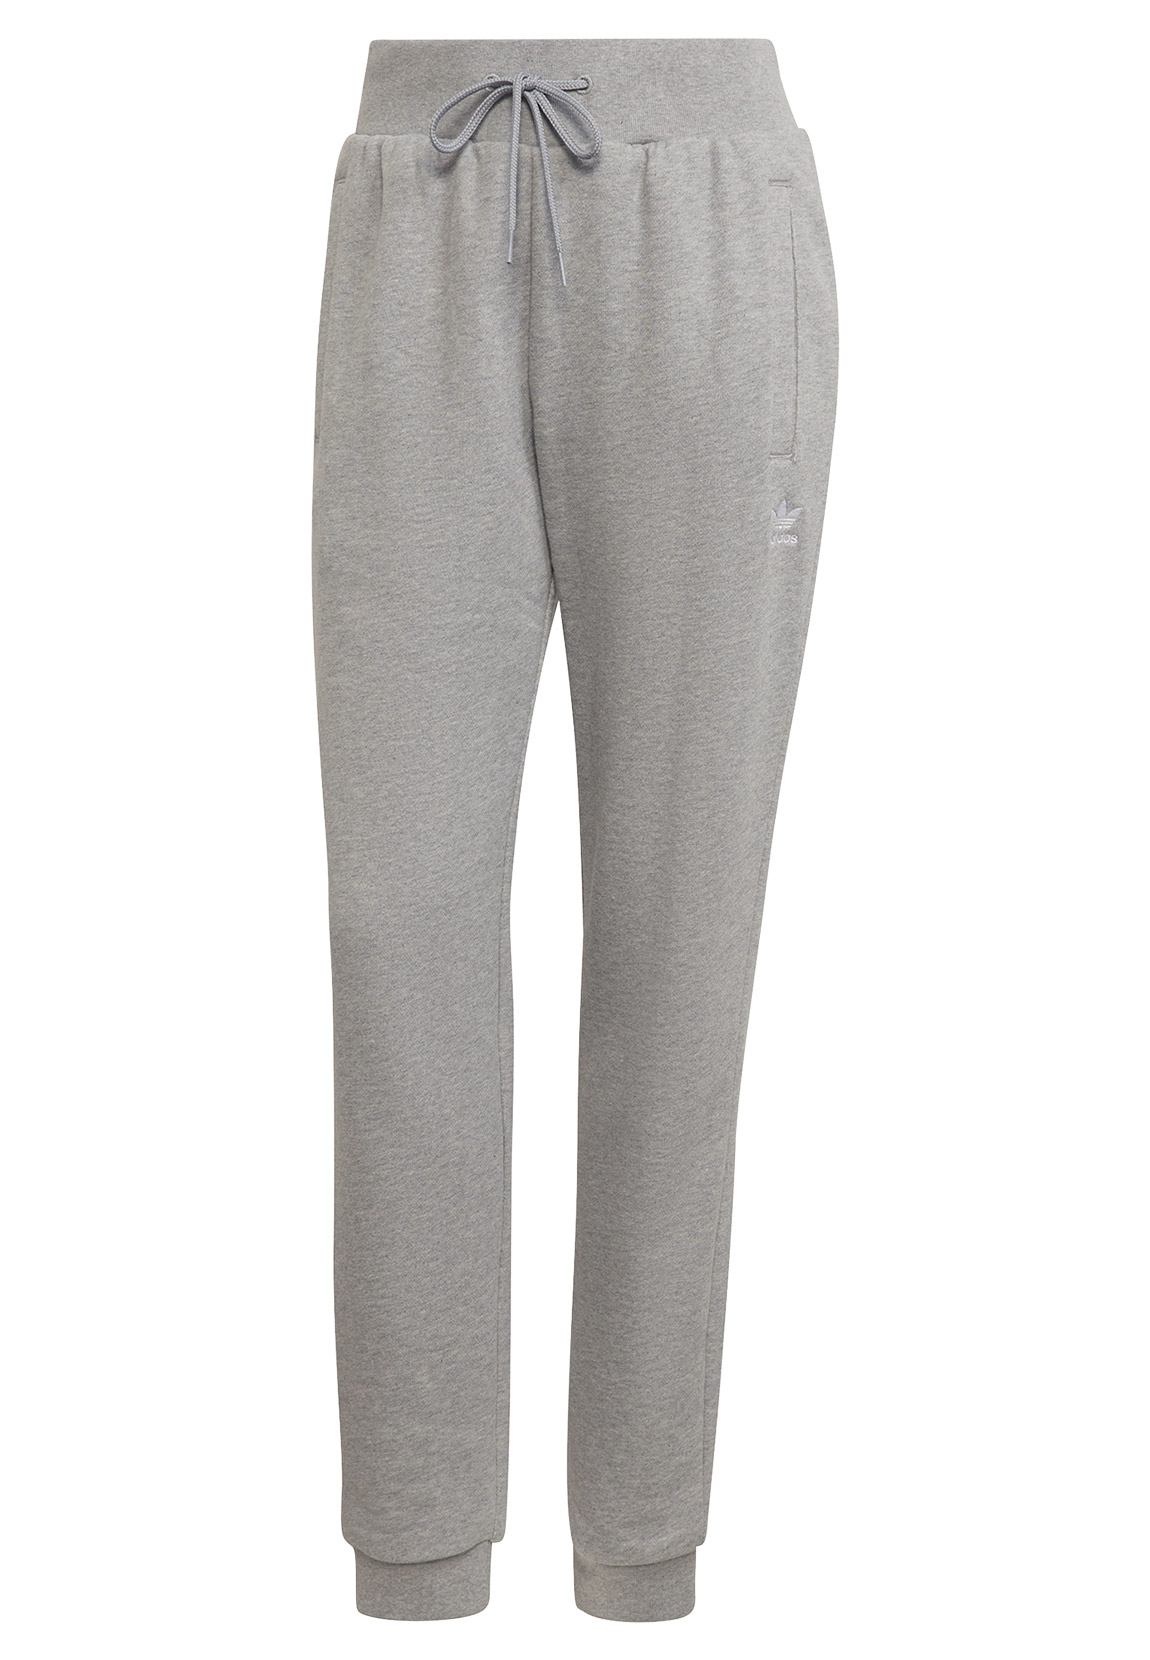 Adidas Originals Adicolor Hf7501 Hose 36 Medium Grey Heather günstig online kaufen